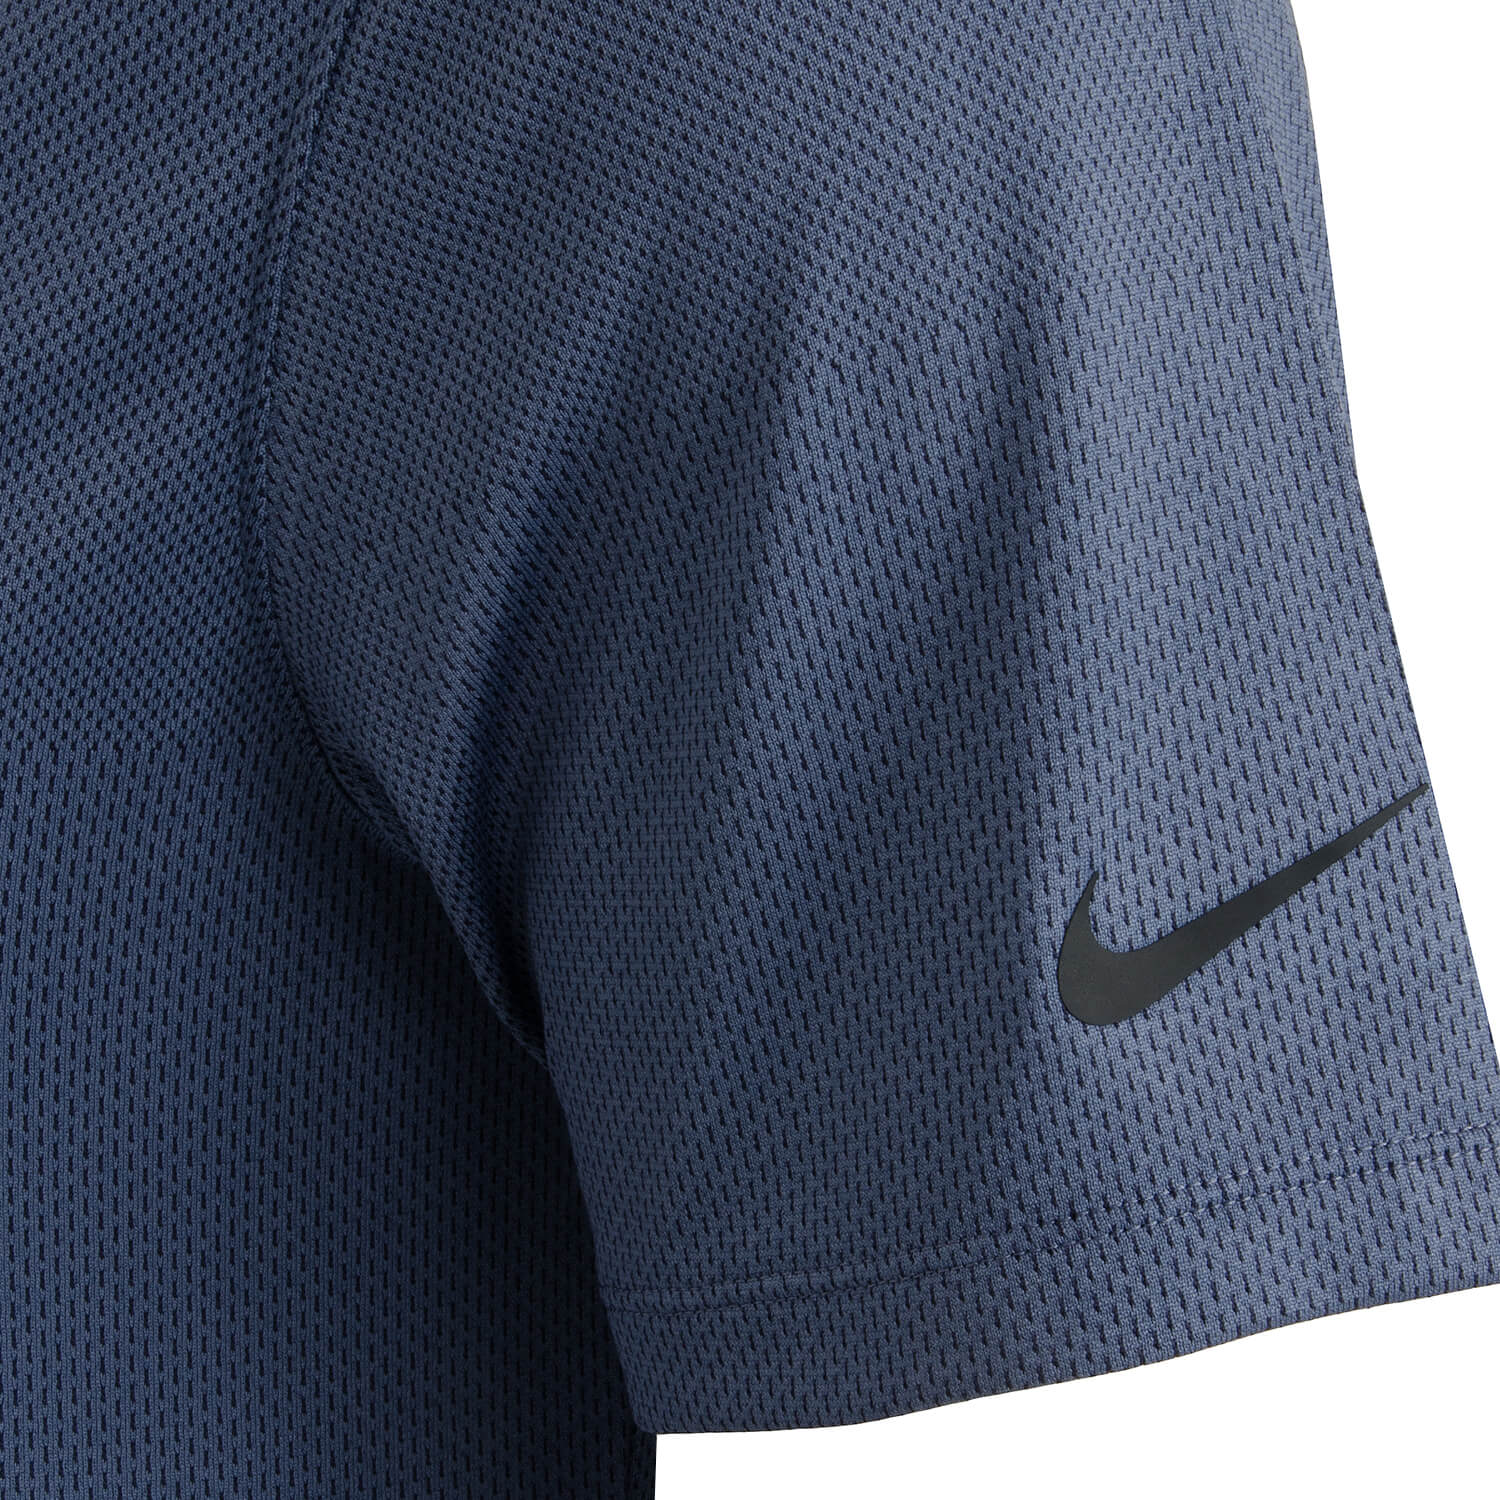 Nike Dry Vapor Jacquard Polo Shirt Obsidian | Scottsdale Golf